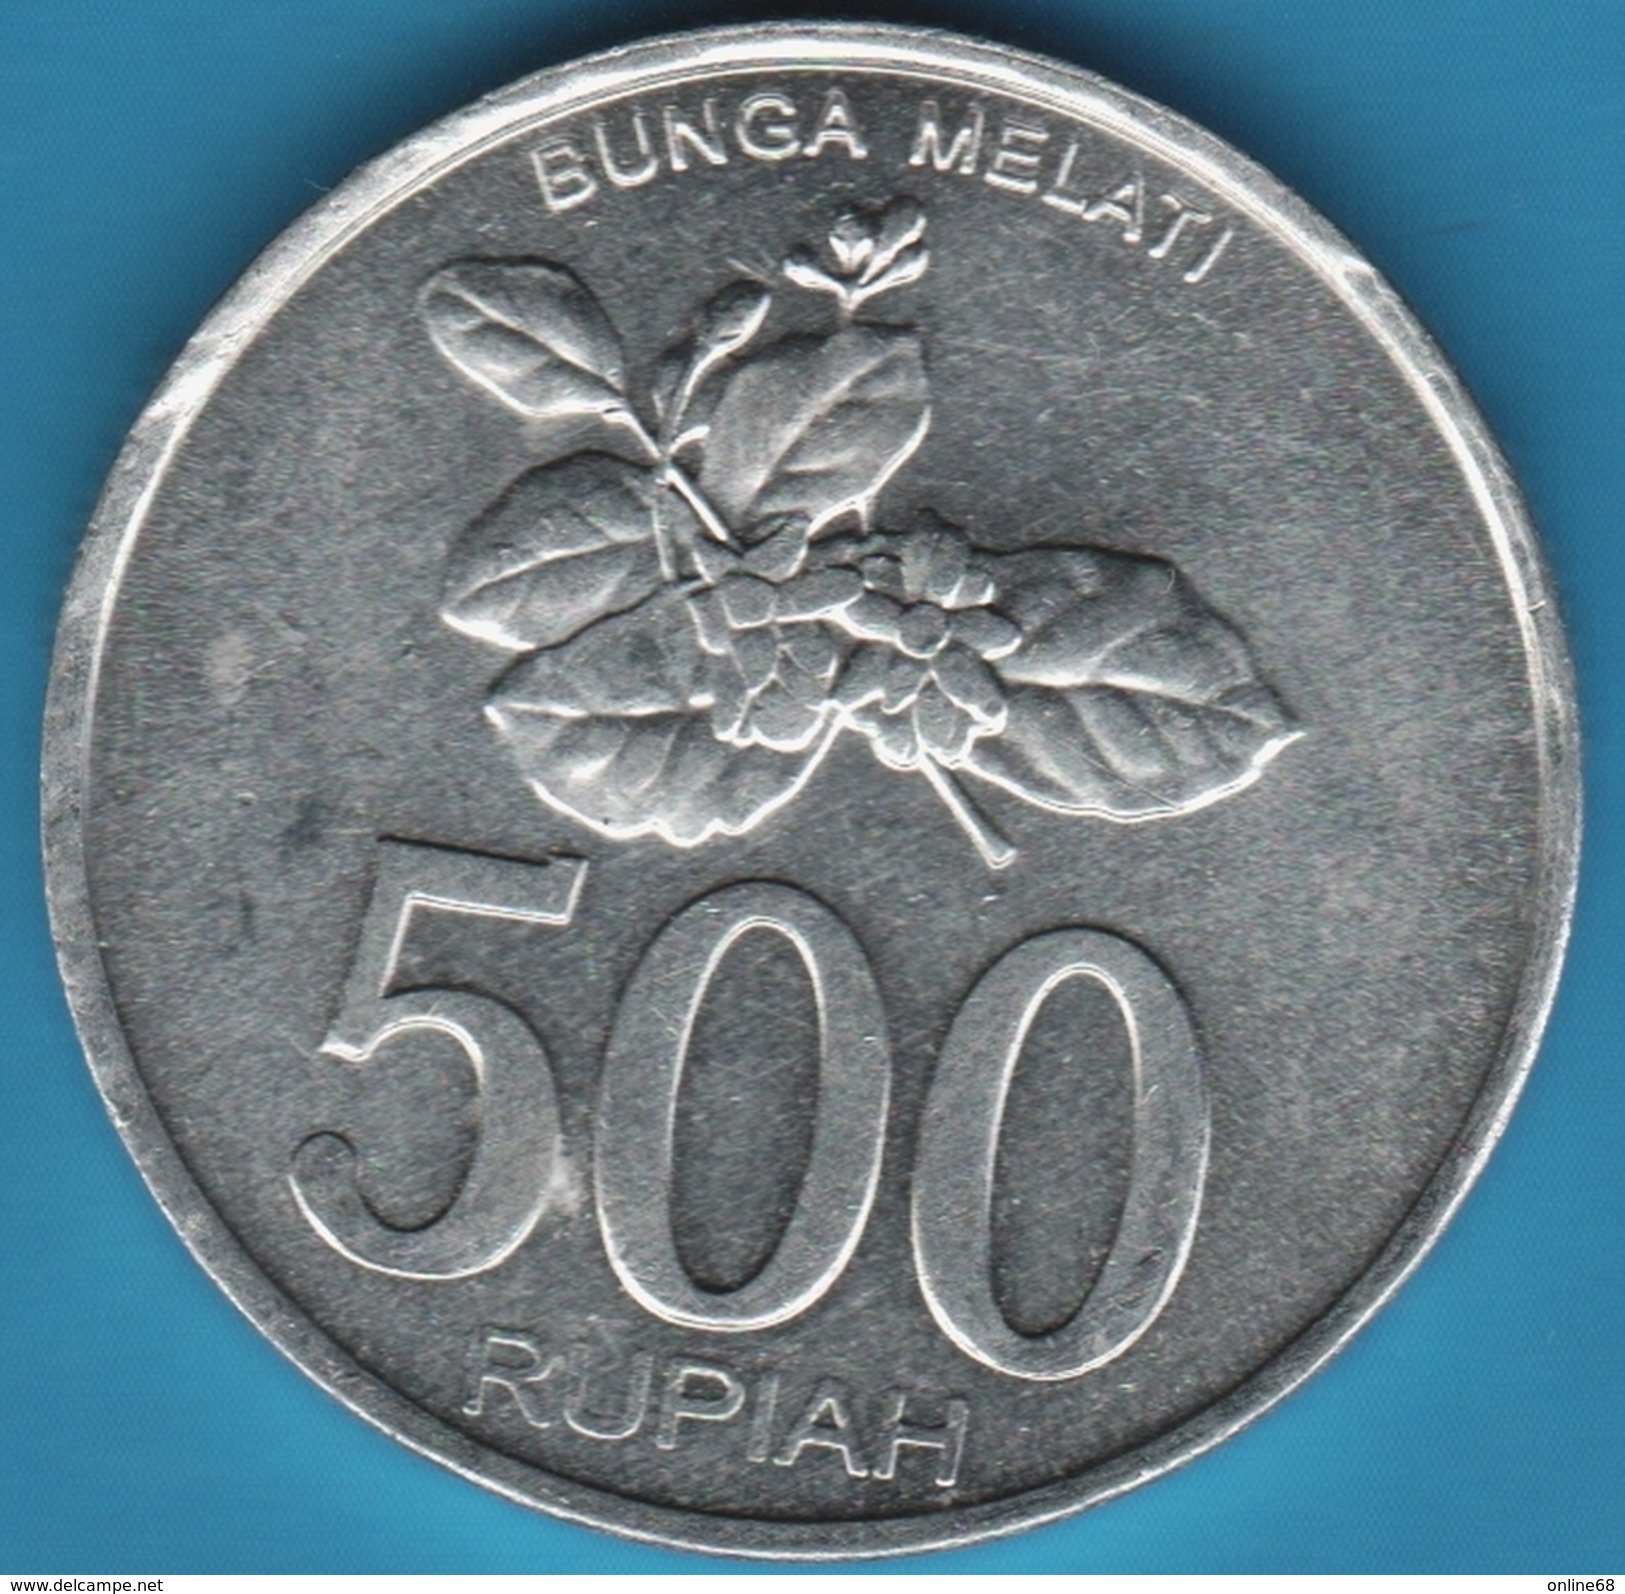 INDONESIA 500 RUPIAH 2003 BUNGA MELATI KM# 67 - Indonesia